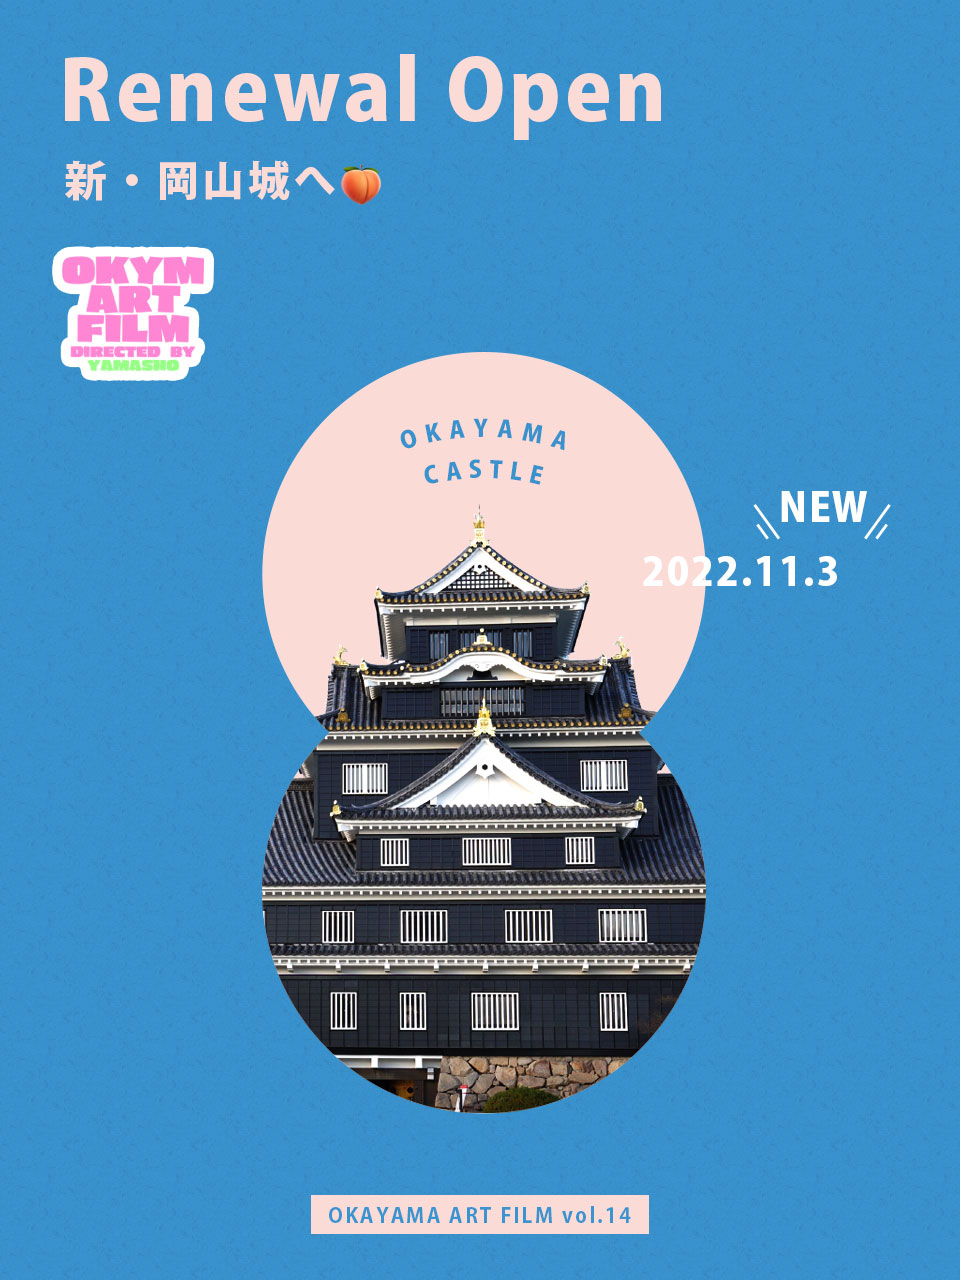 OKAYAMA ART FILM vol.14 2022.11.3 renewal open 新・岡山城へ